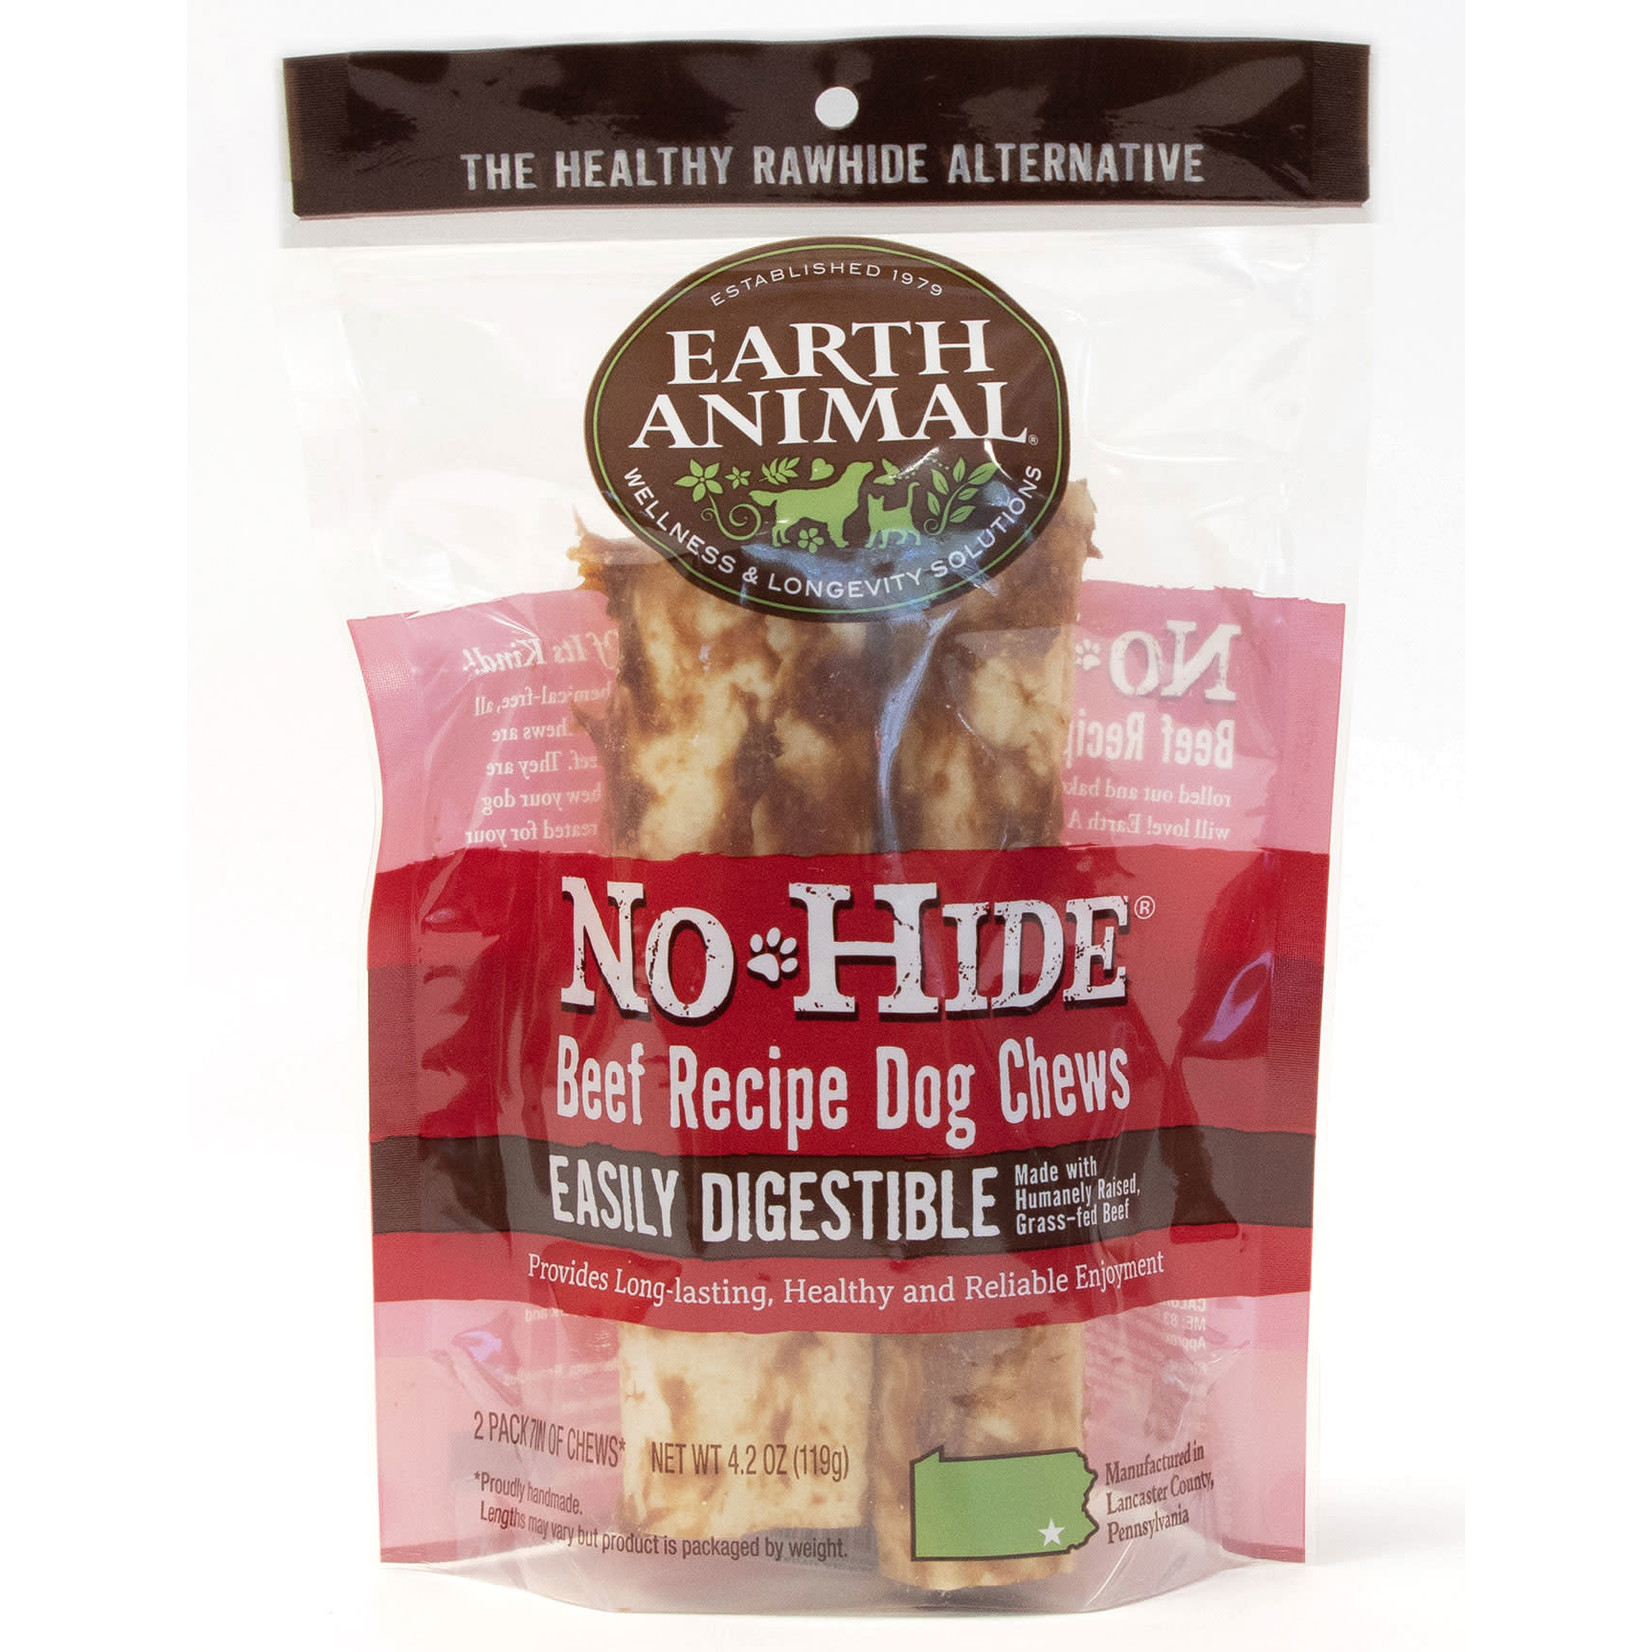 Earth Animal No Hide Beef Recipe Dog Chews, 2 pack